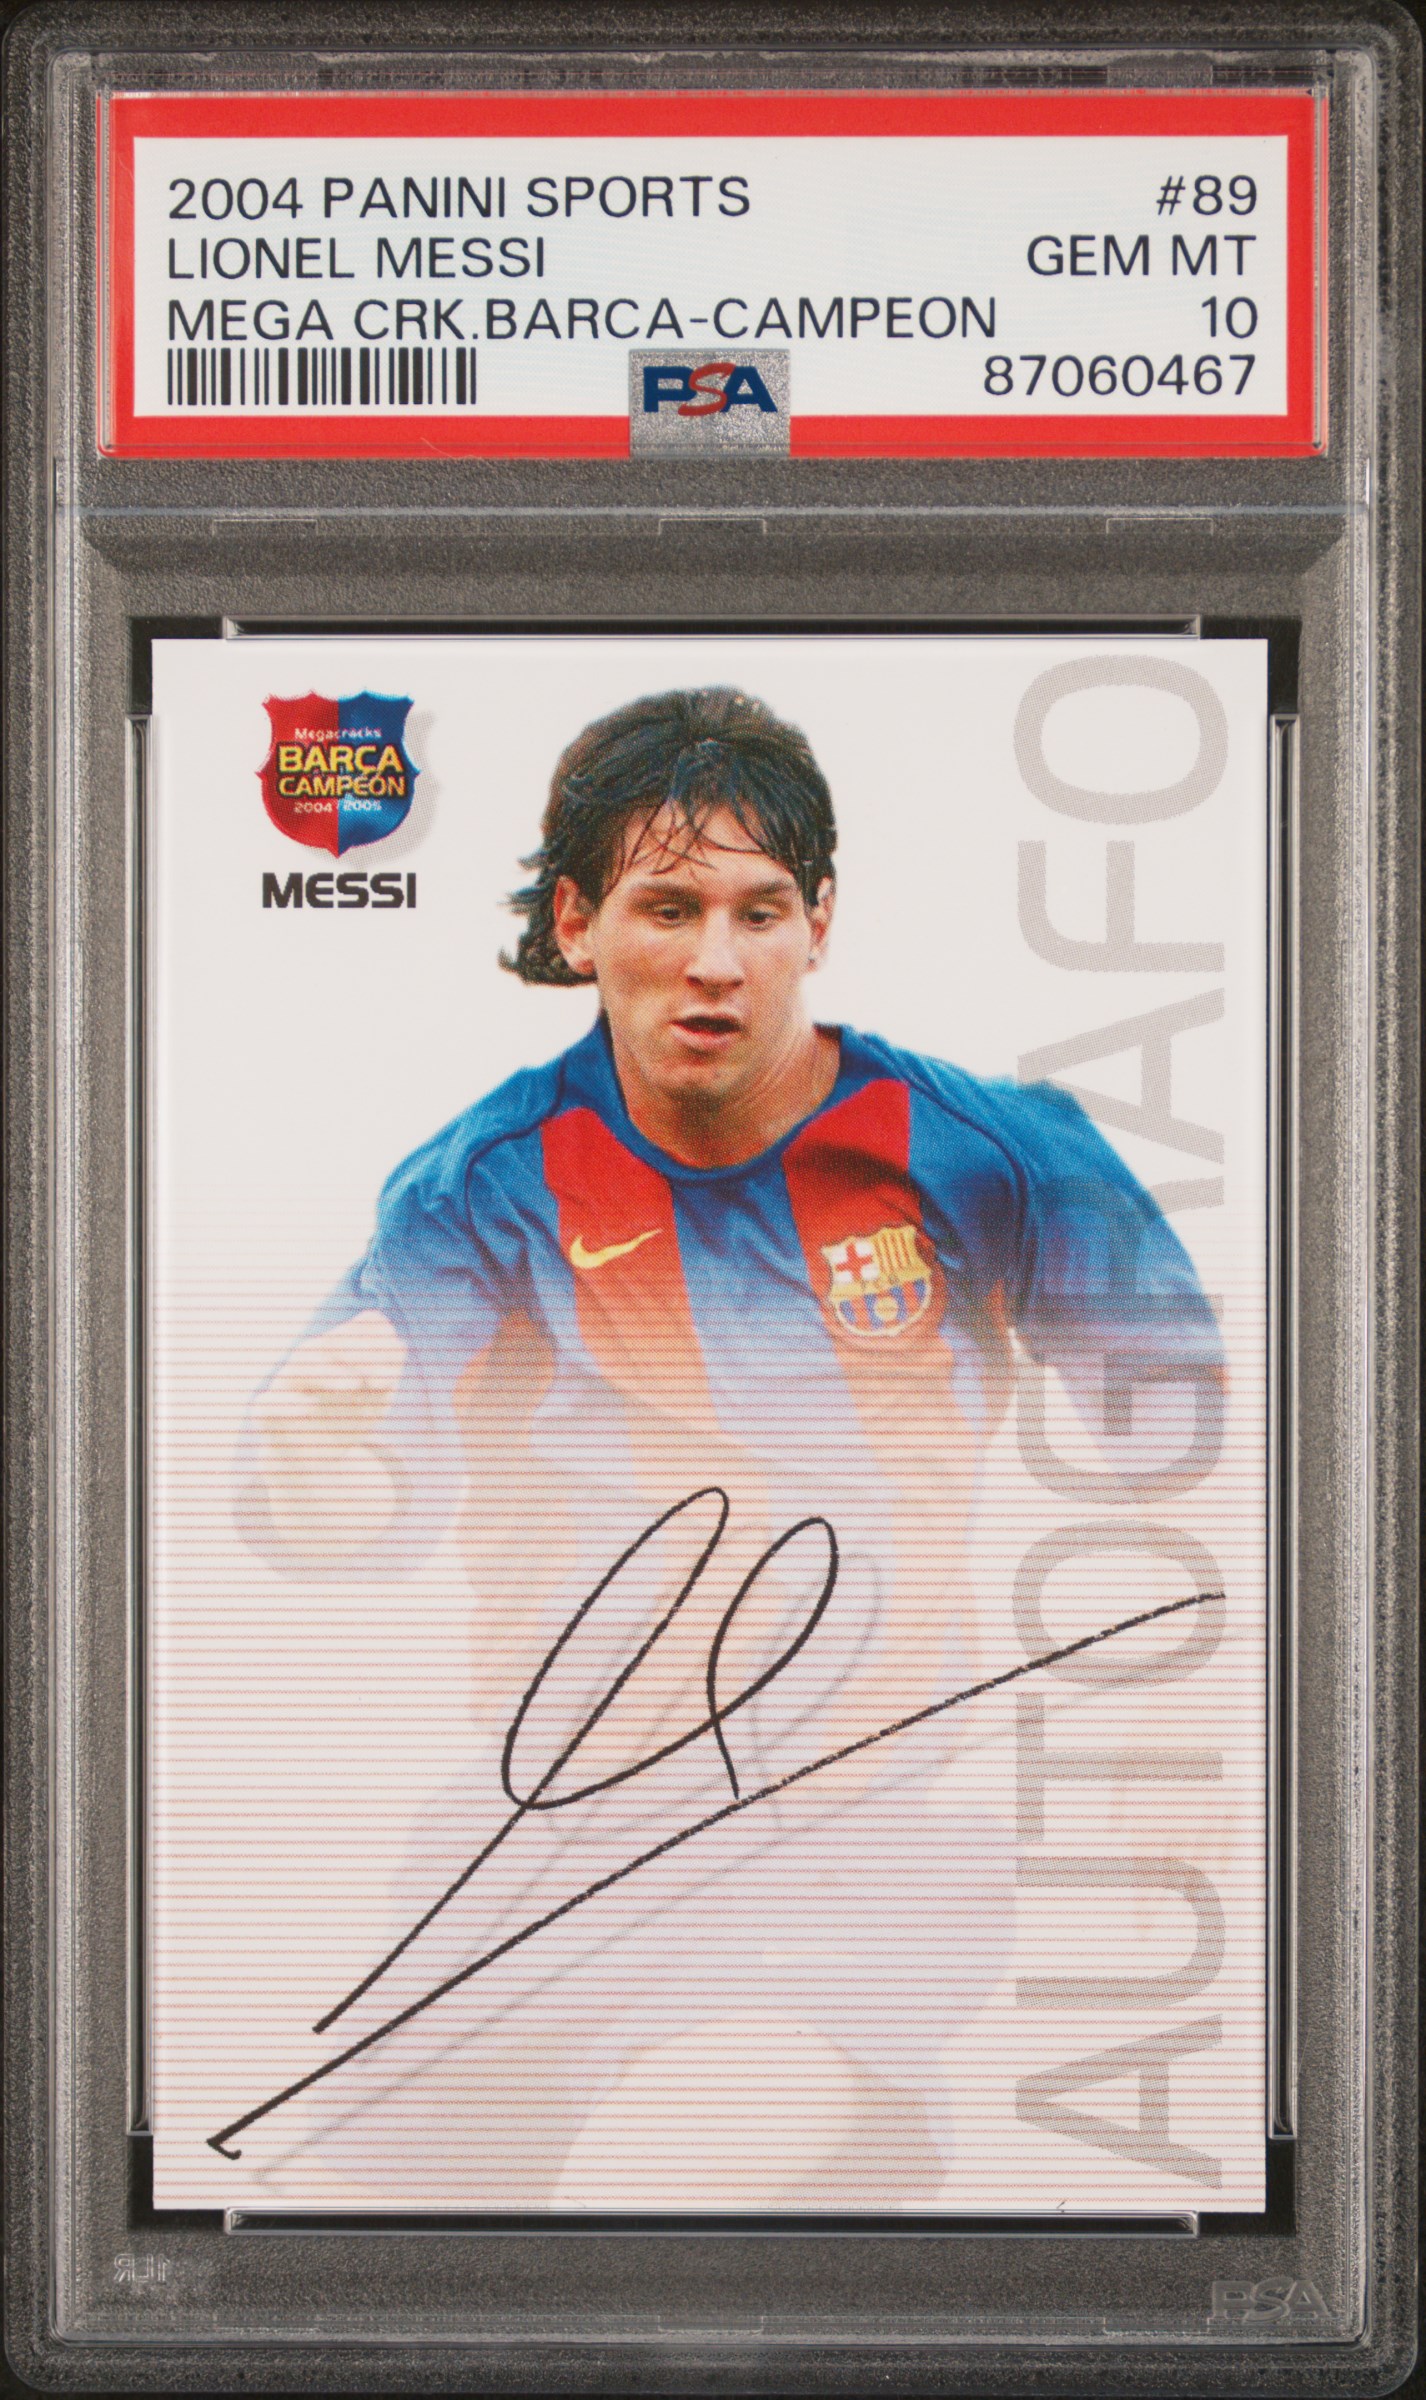 2004-05 Panini Sports Mega Cracks Barca Campeon (Spanish) #89 Lionel Messi Rookie Card – PSA GEM MT 10